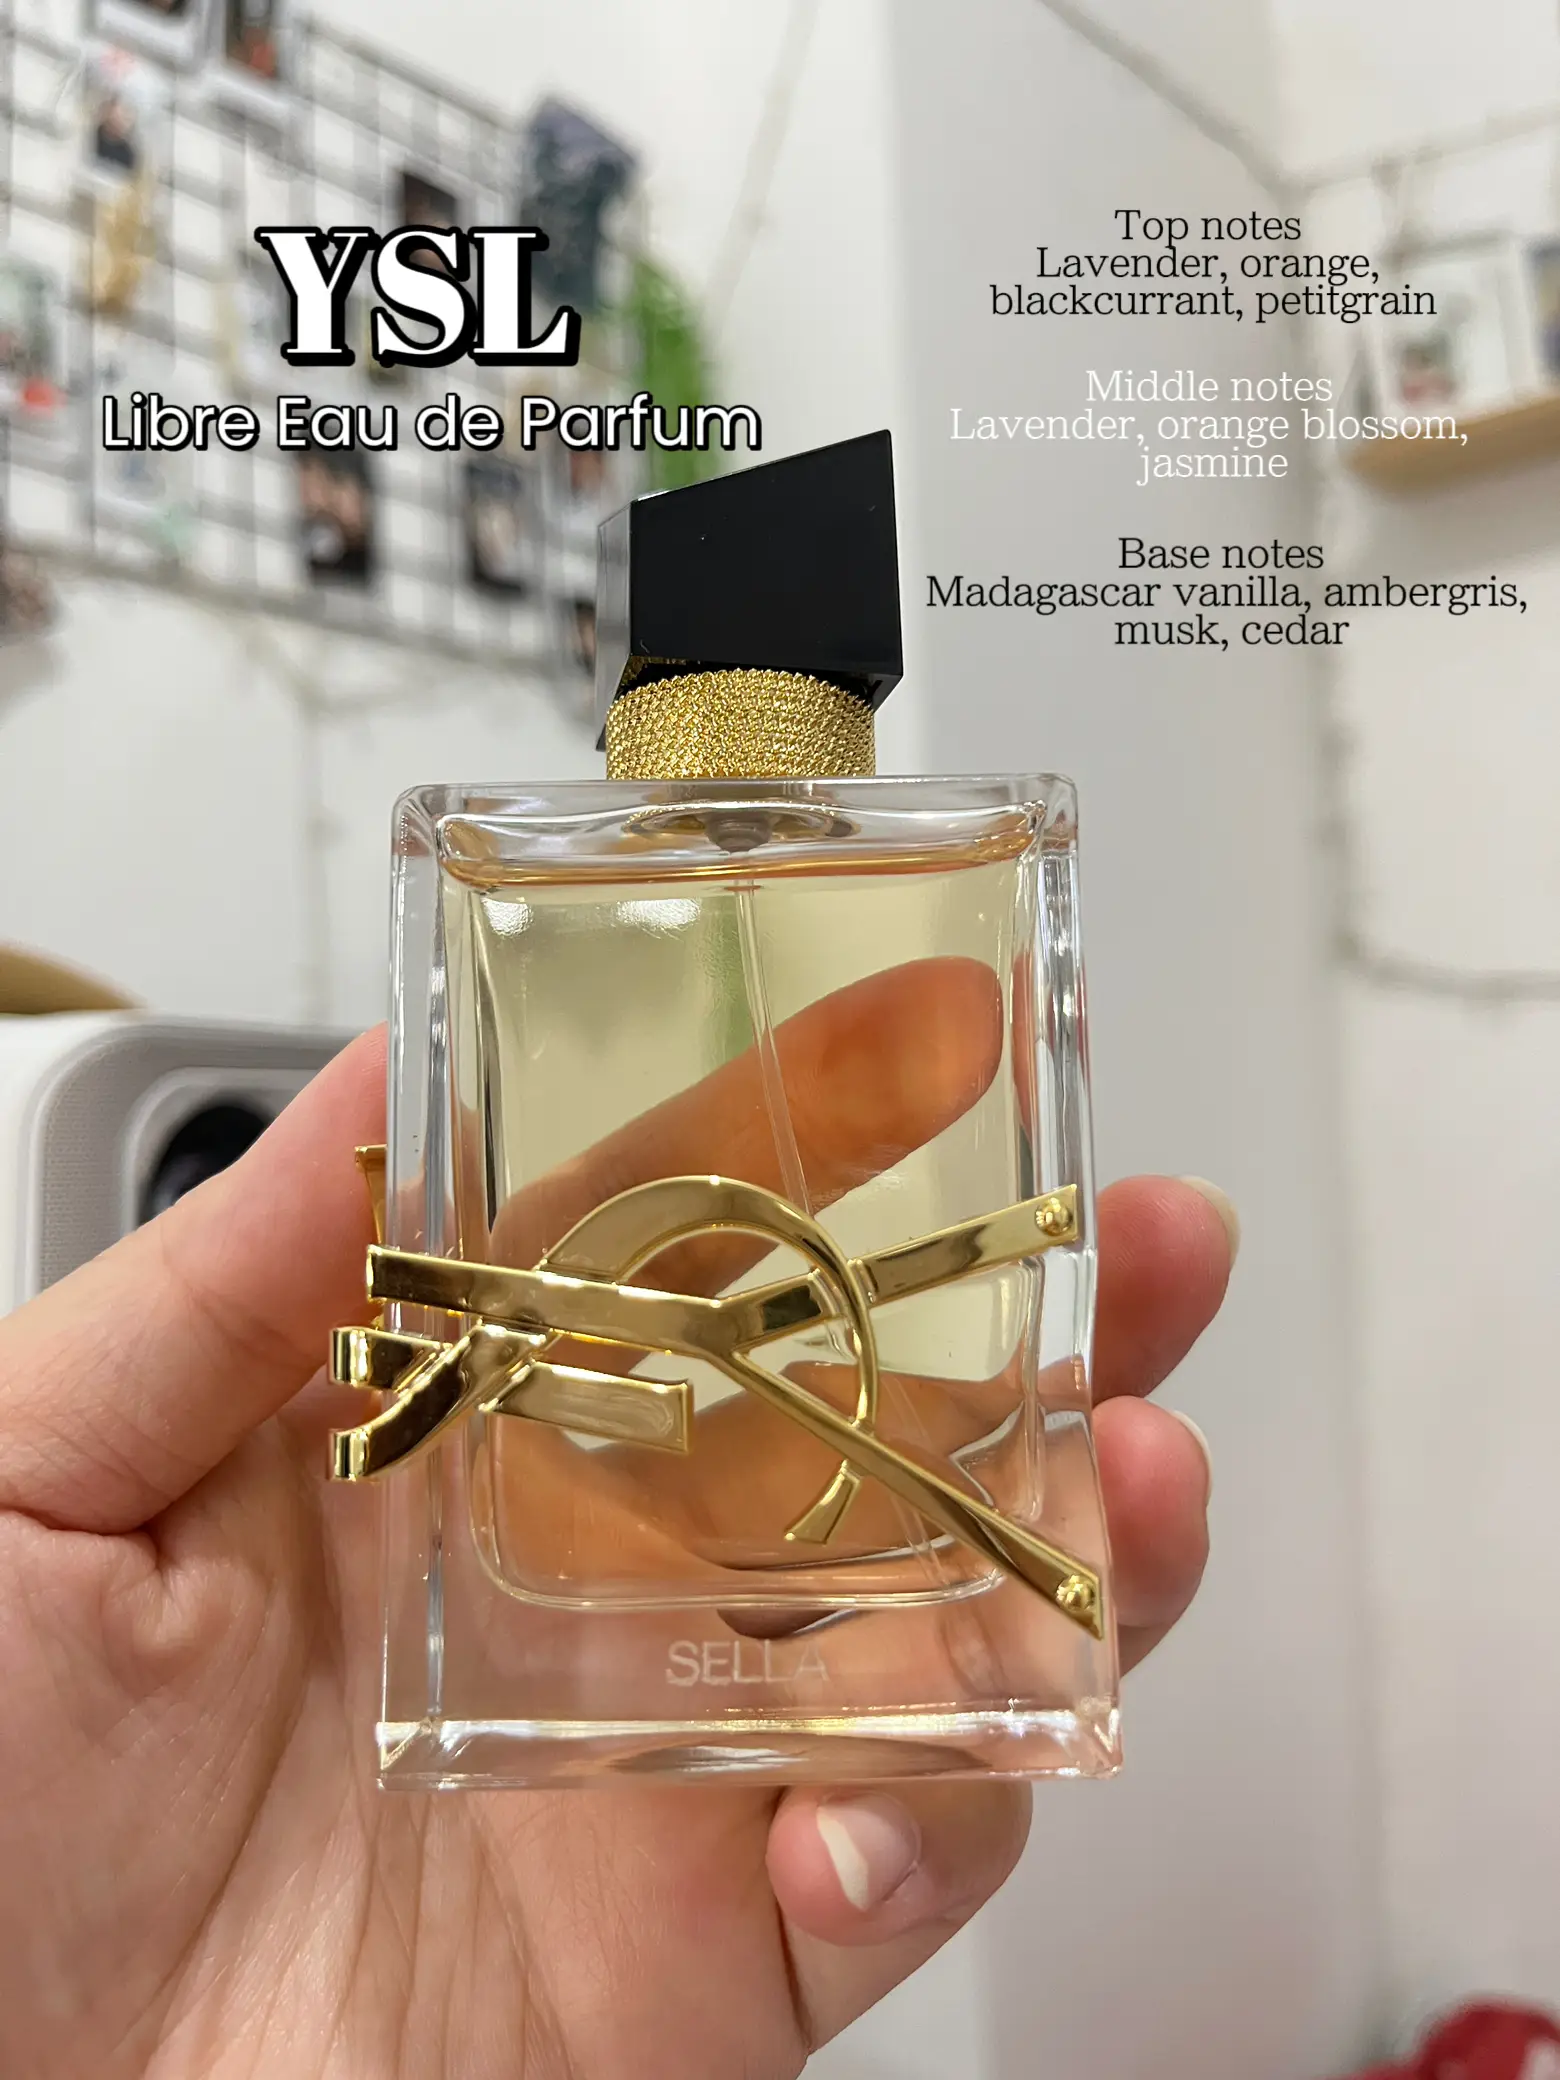 Yves saint laurent Libre Eau Parfum 50ml+Mini Eyeliner+Mini